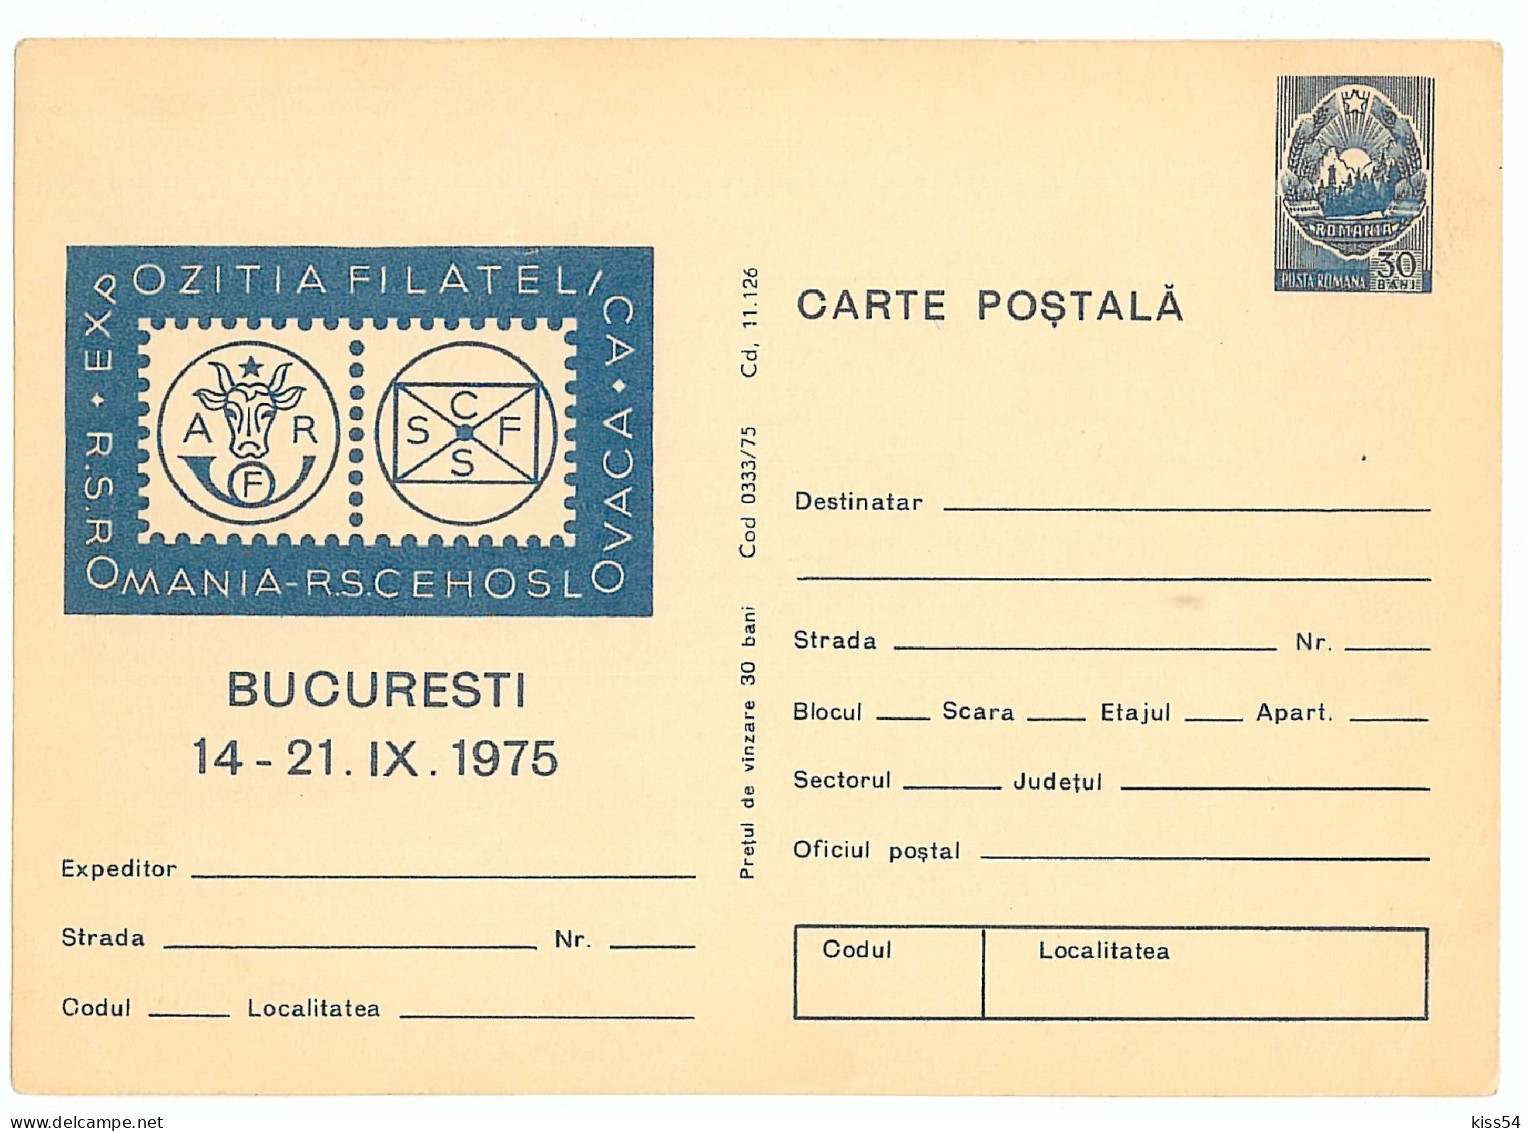 IP 75 - 333 STAMPS, Philatelic Exhibition Romania-Czechoslovak - Stationery - Unused - 1975 - Postal Stationery